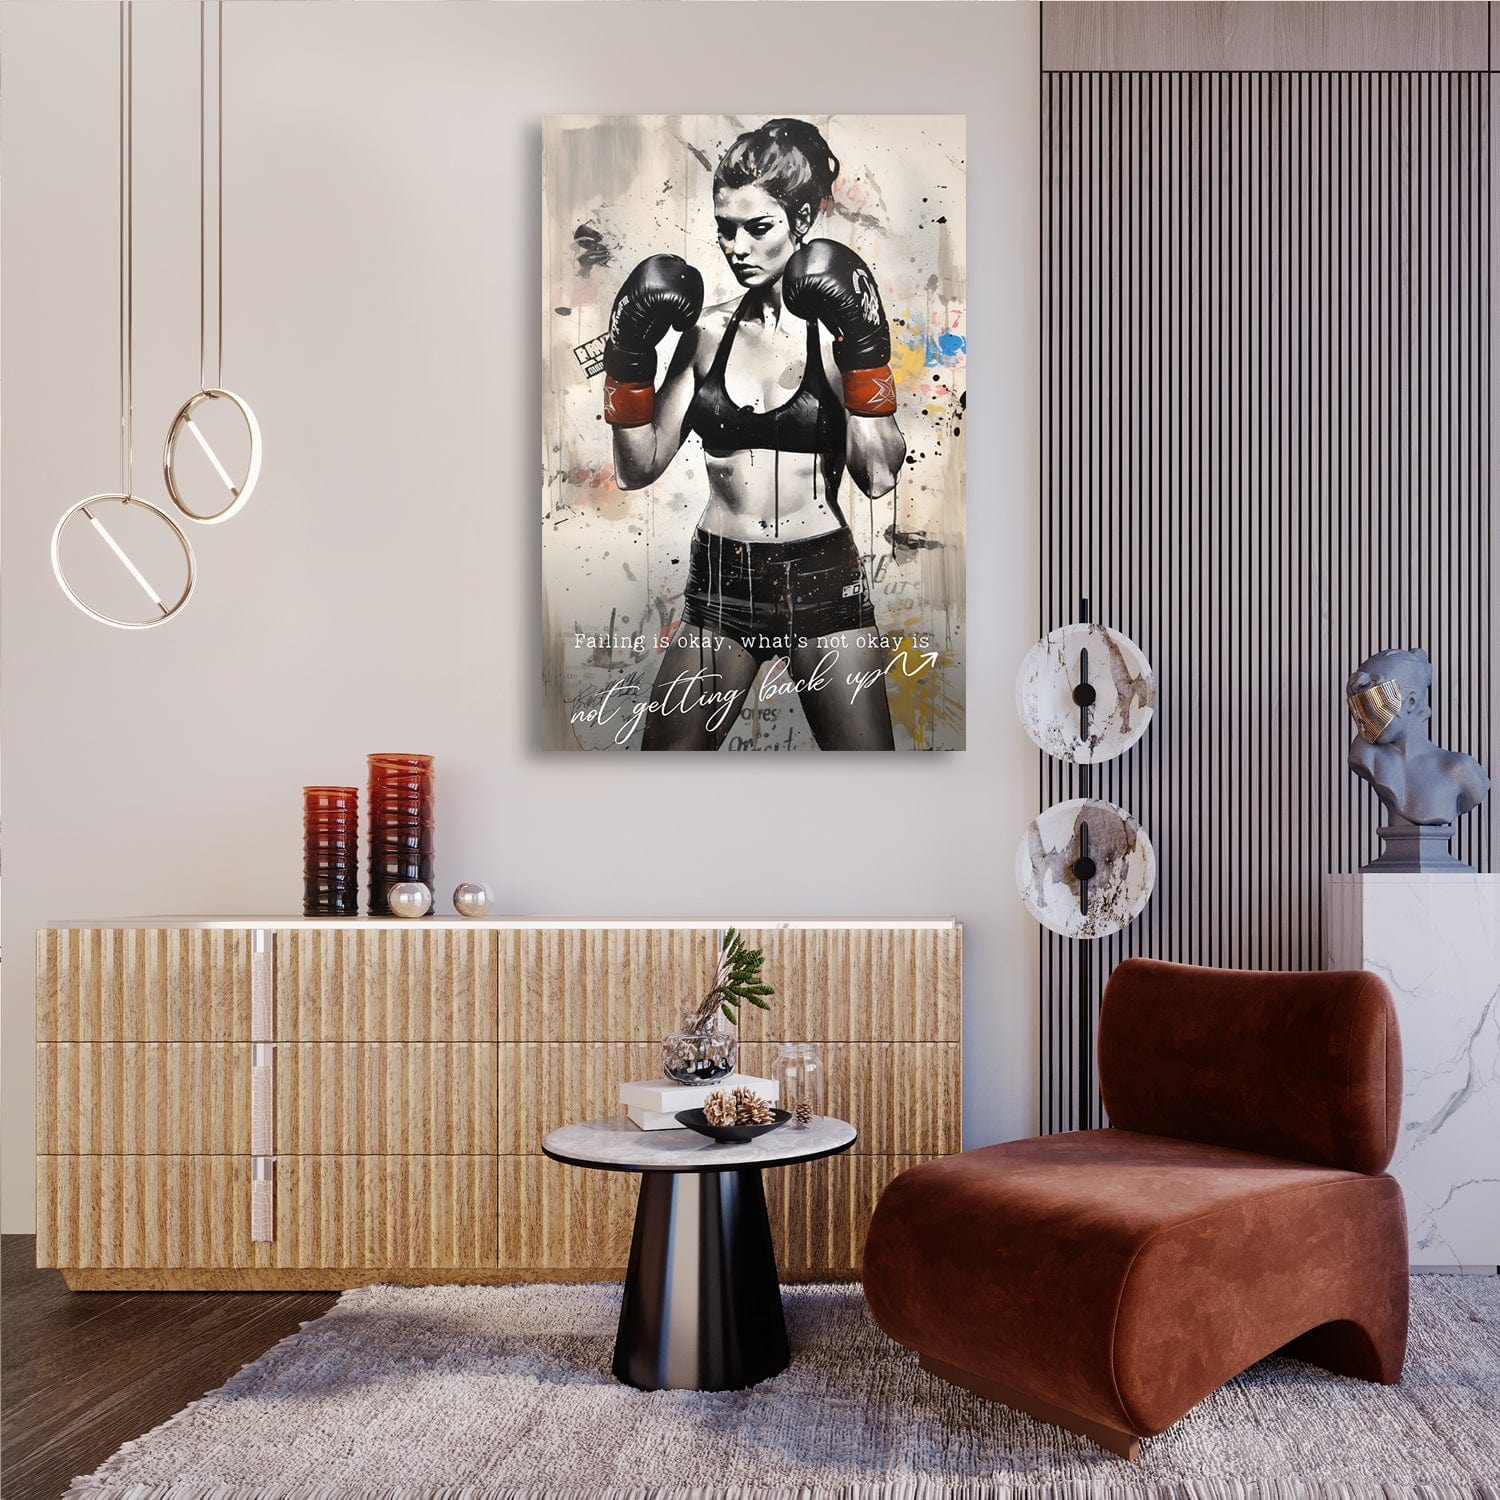 Female Boxer - Falling Is Okay Quote Wall Art | Inspirational Wall Art Motivational Wall Art Quotes Office Art | ImpaktMaker Exclusive Canvas Art Portrait